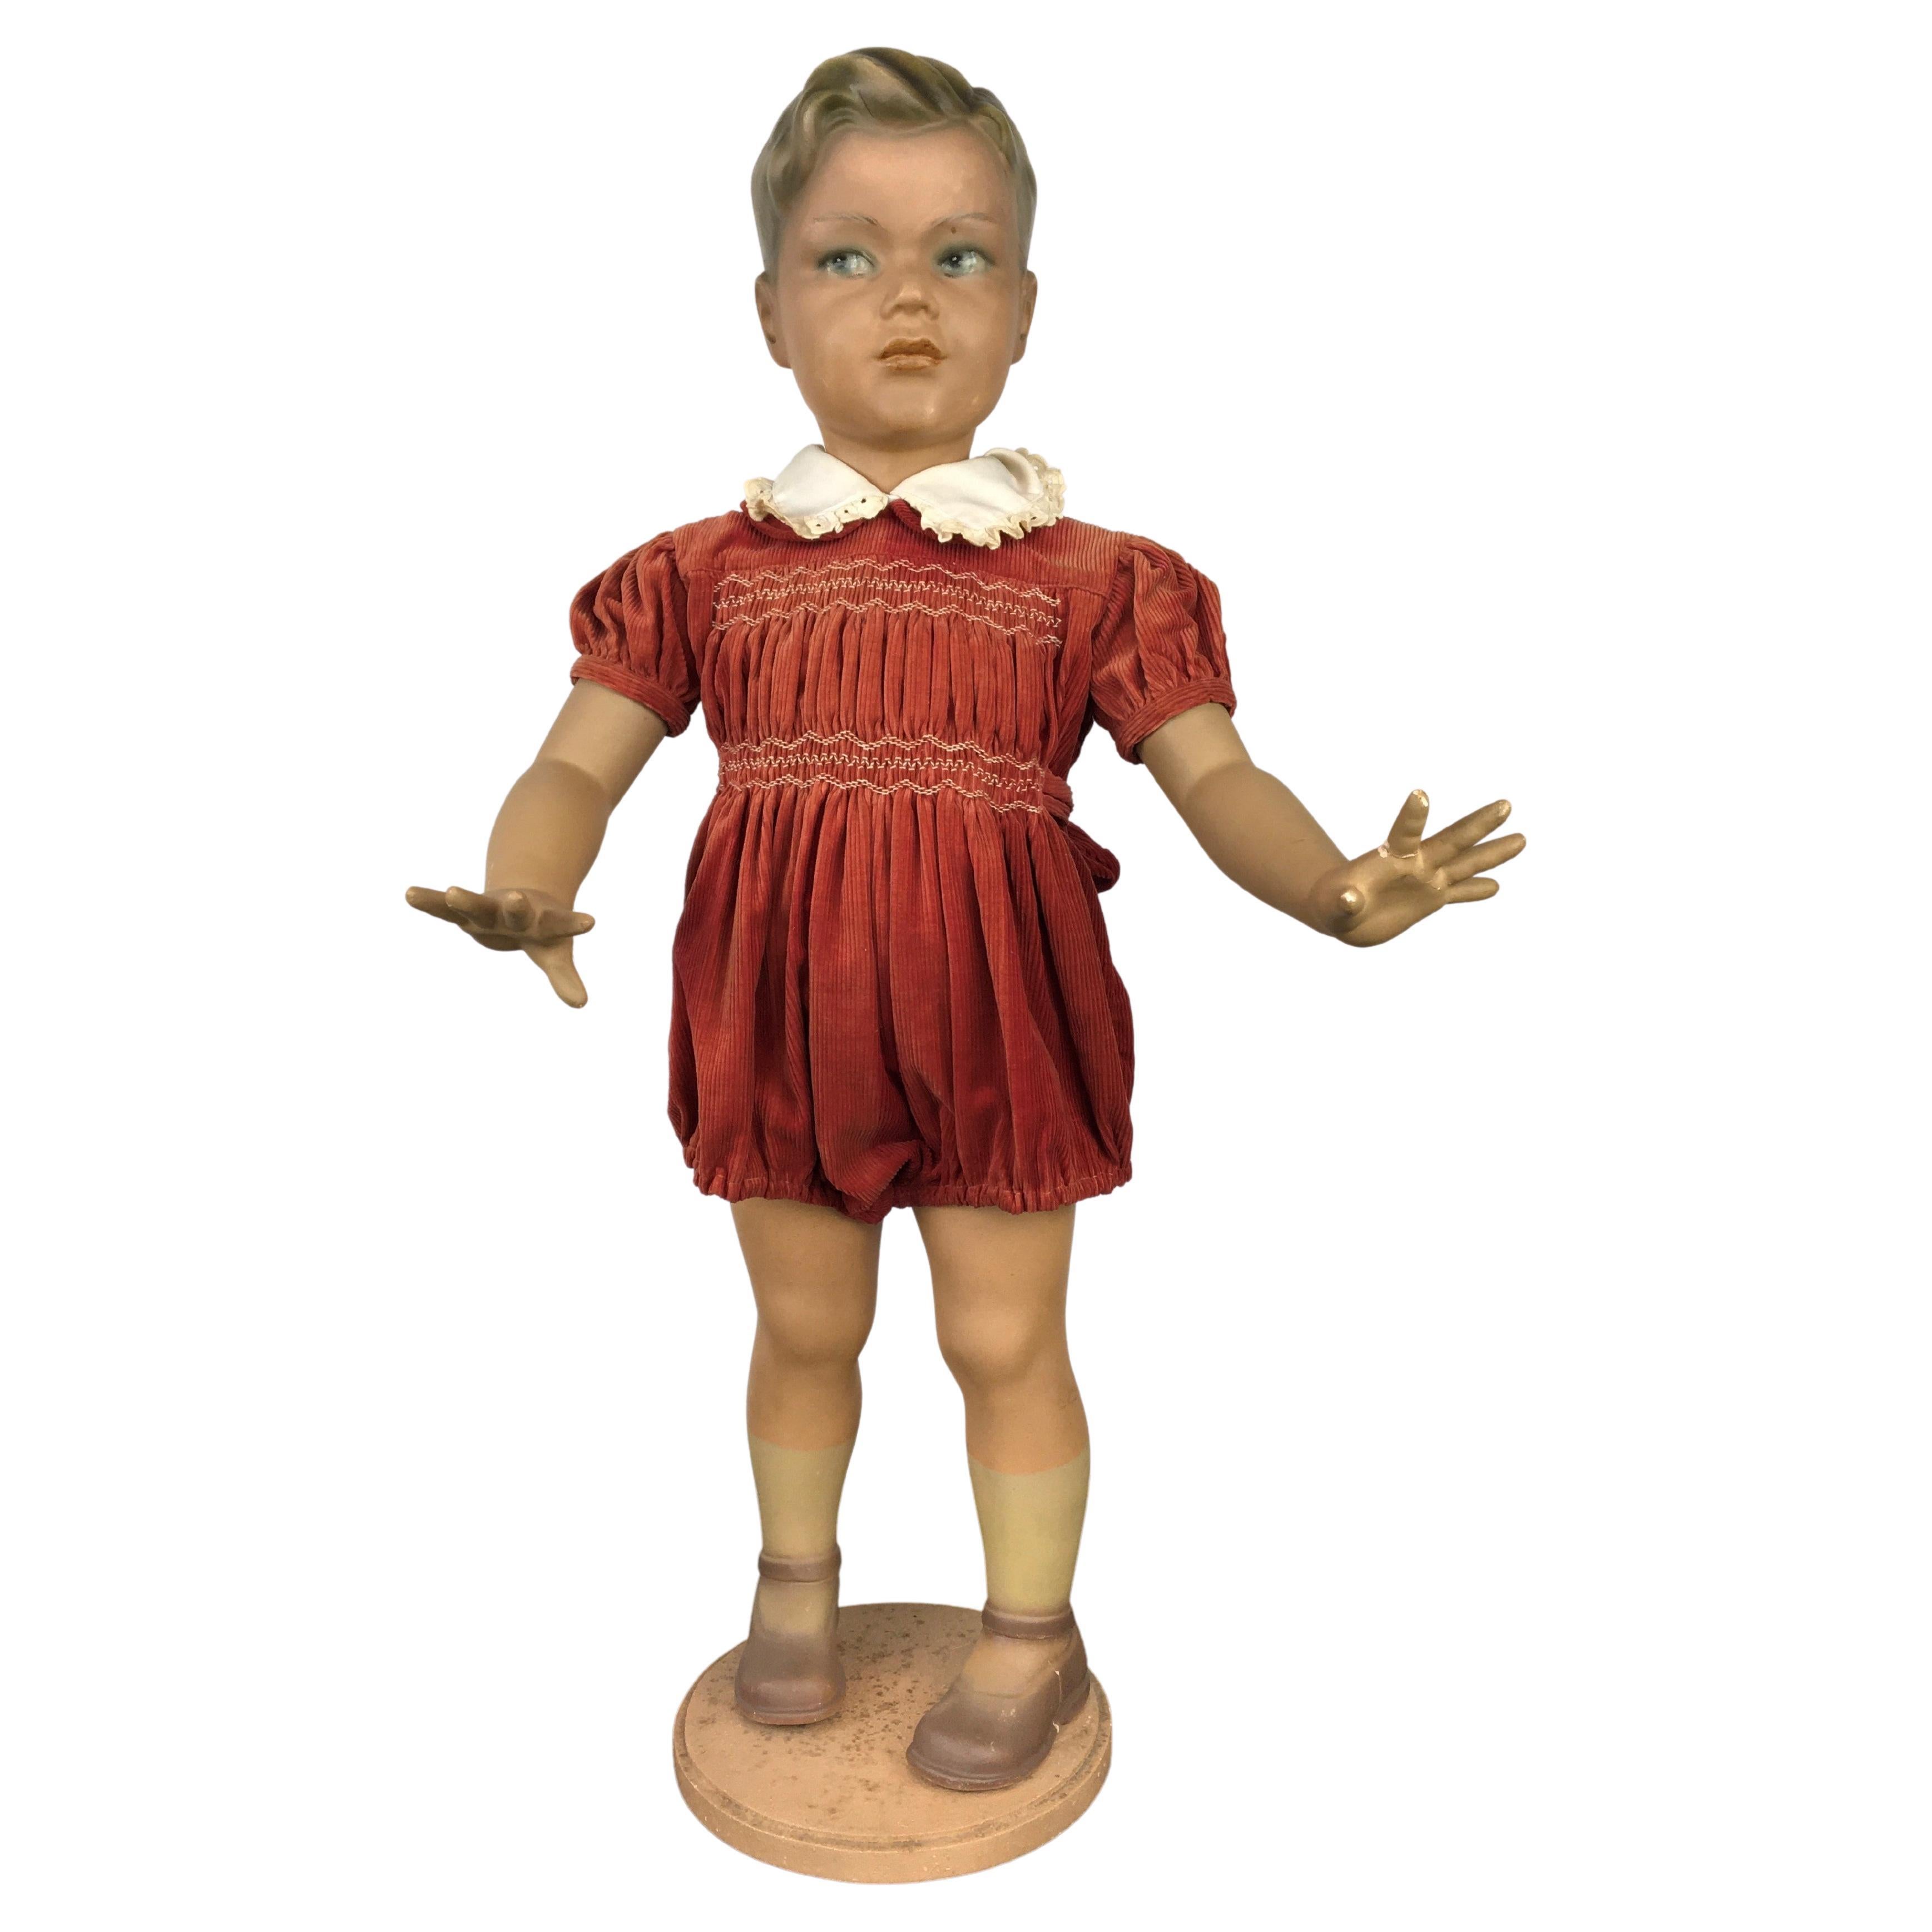 Store Display Boy Doll, Child Mannequin